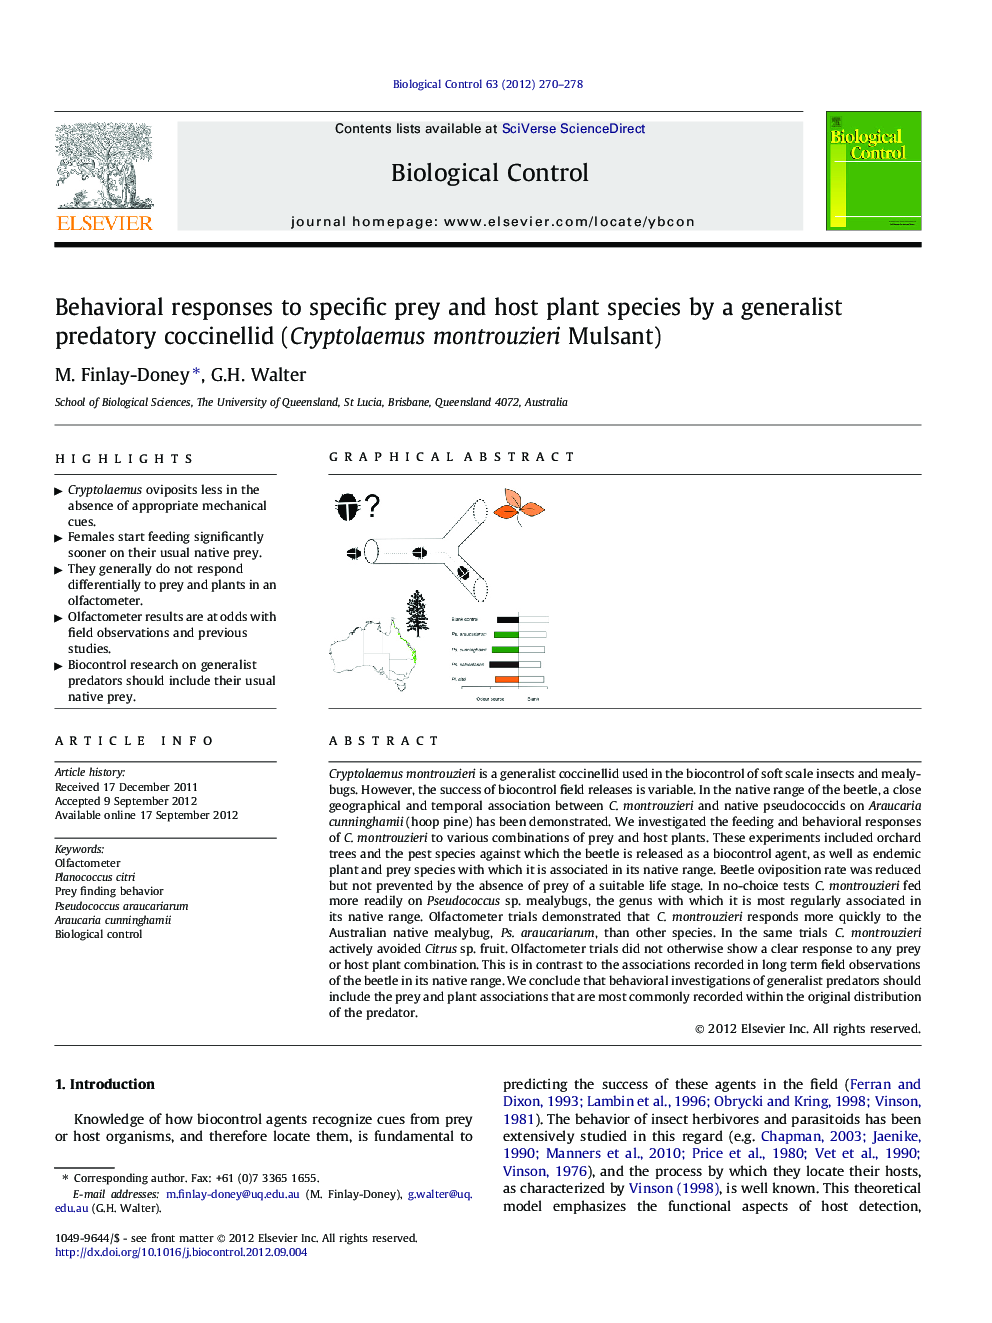 Behavioral responses to specific prey and host plant species by a generalist predatory coccinellid (Cryptolaemus montrouzieri Mulsant)